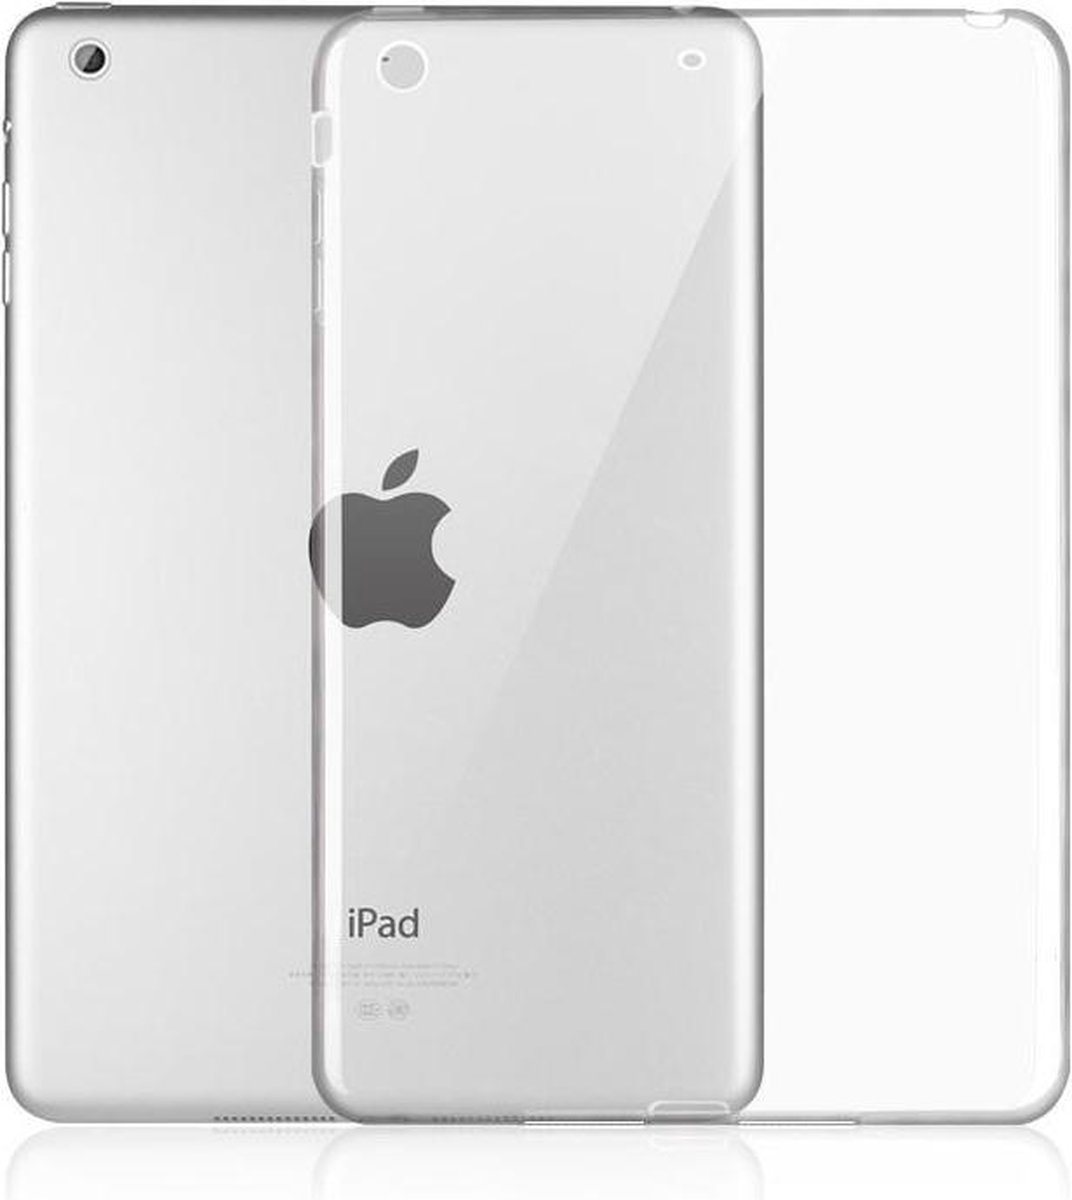 iPad Air 2 Siliconen hoesje Transparant. Je iPad Air beschermt tegen krassen en stoten.